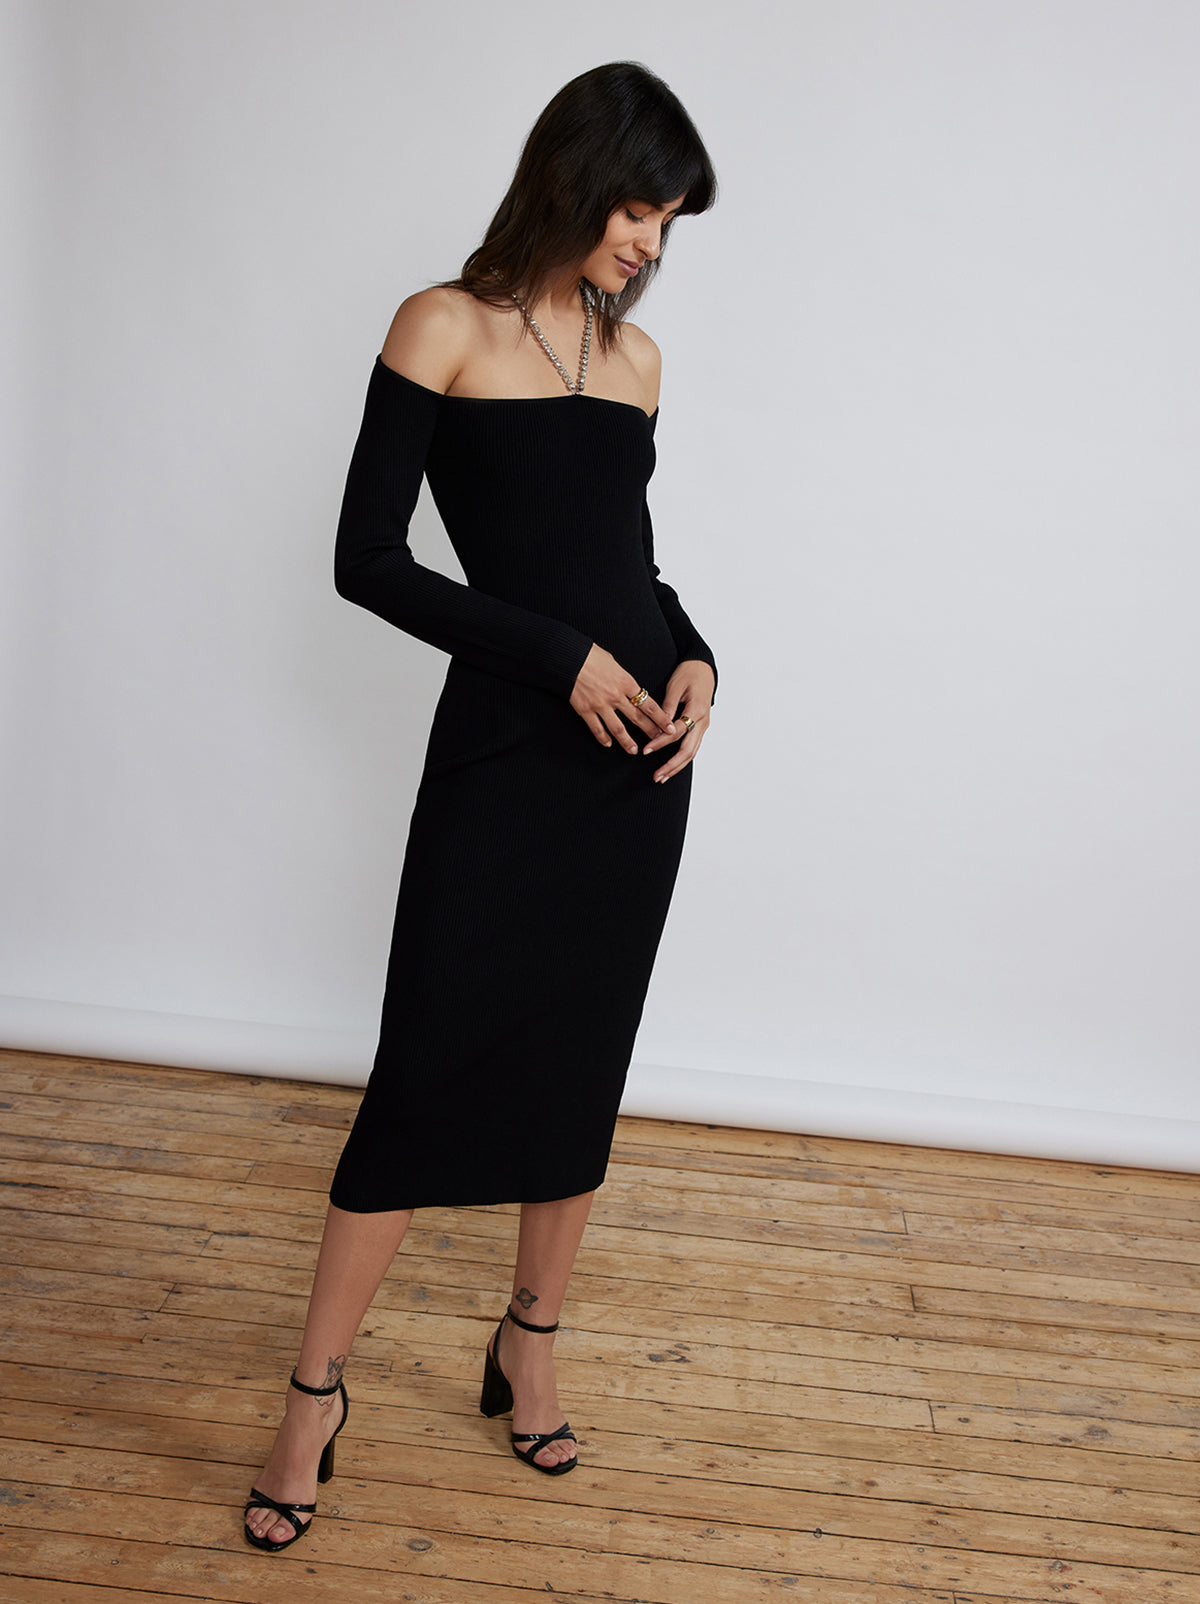 Renee Black Bardot Knit Dress By KITRI Studio